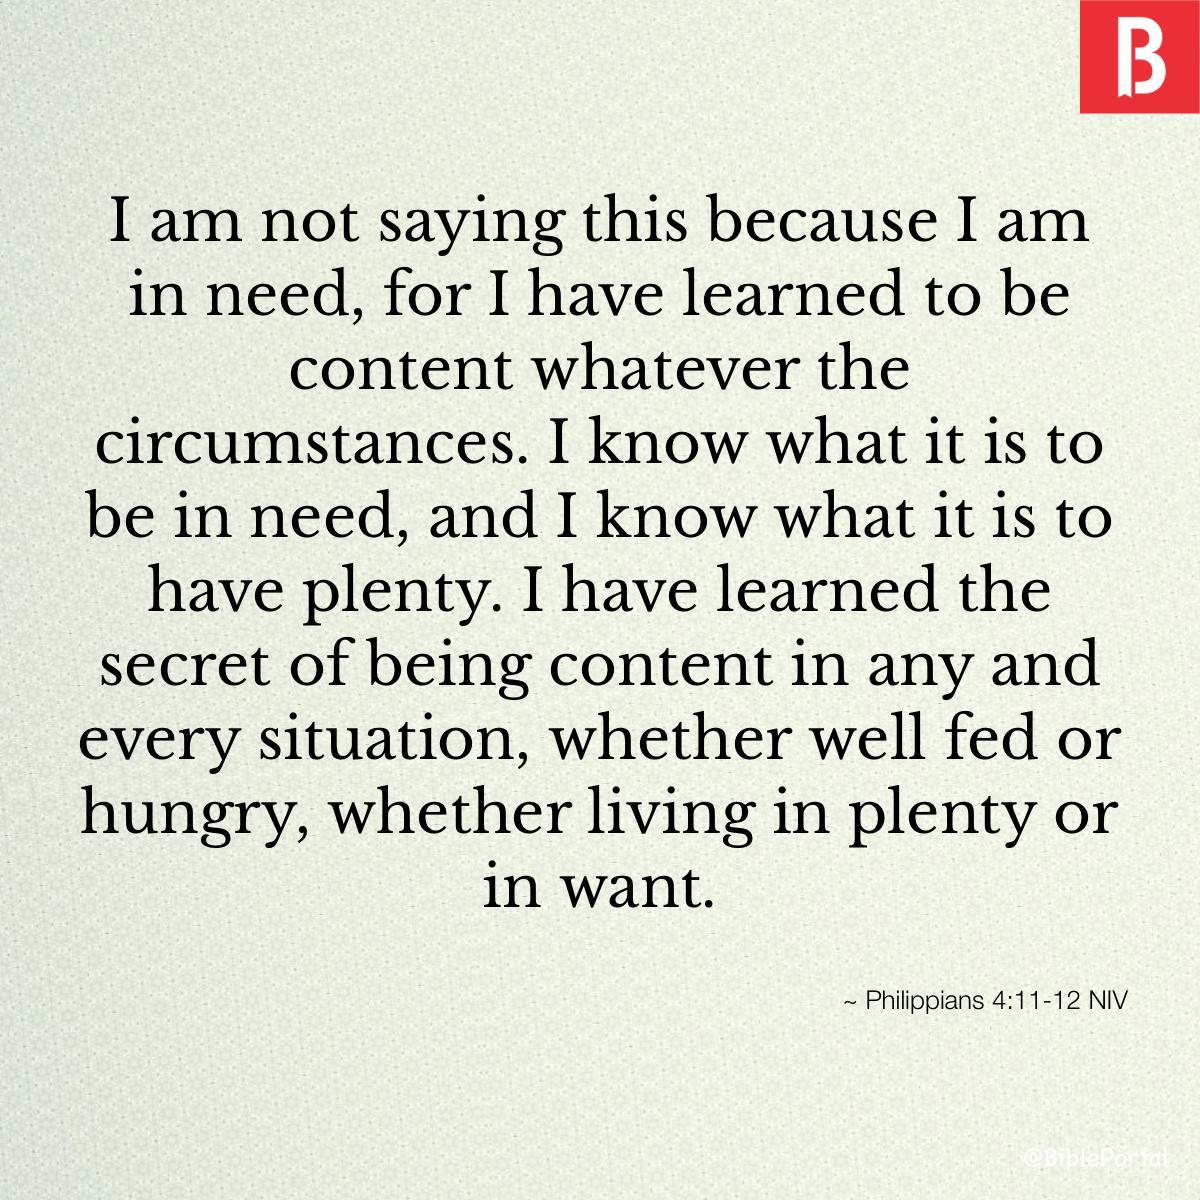 Philippians 4:11-12 NIV